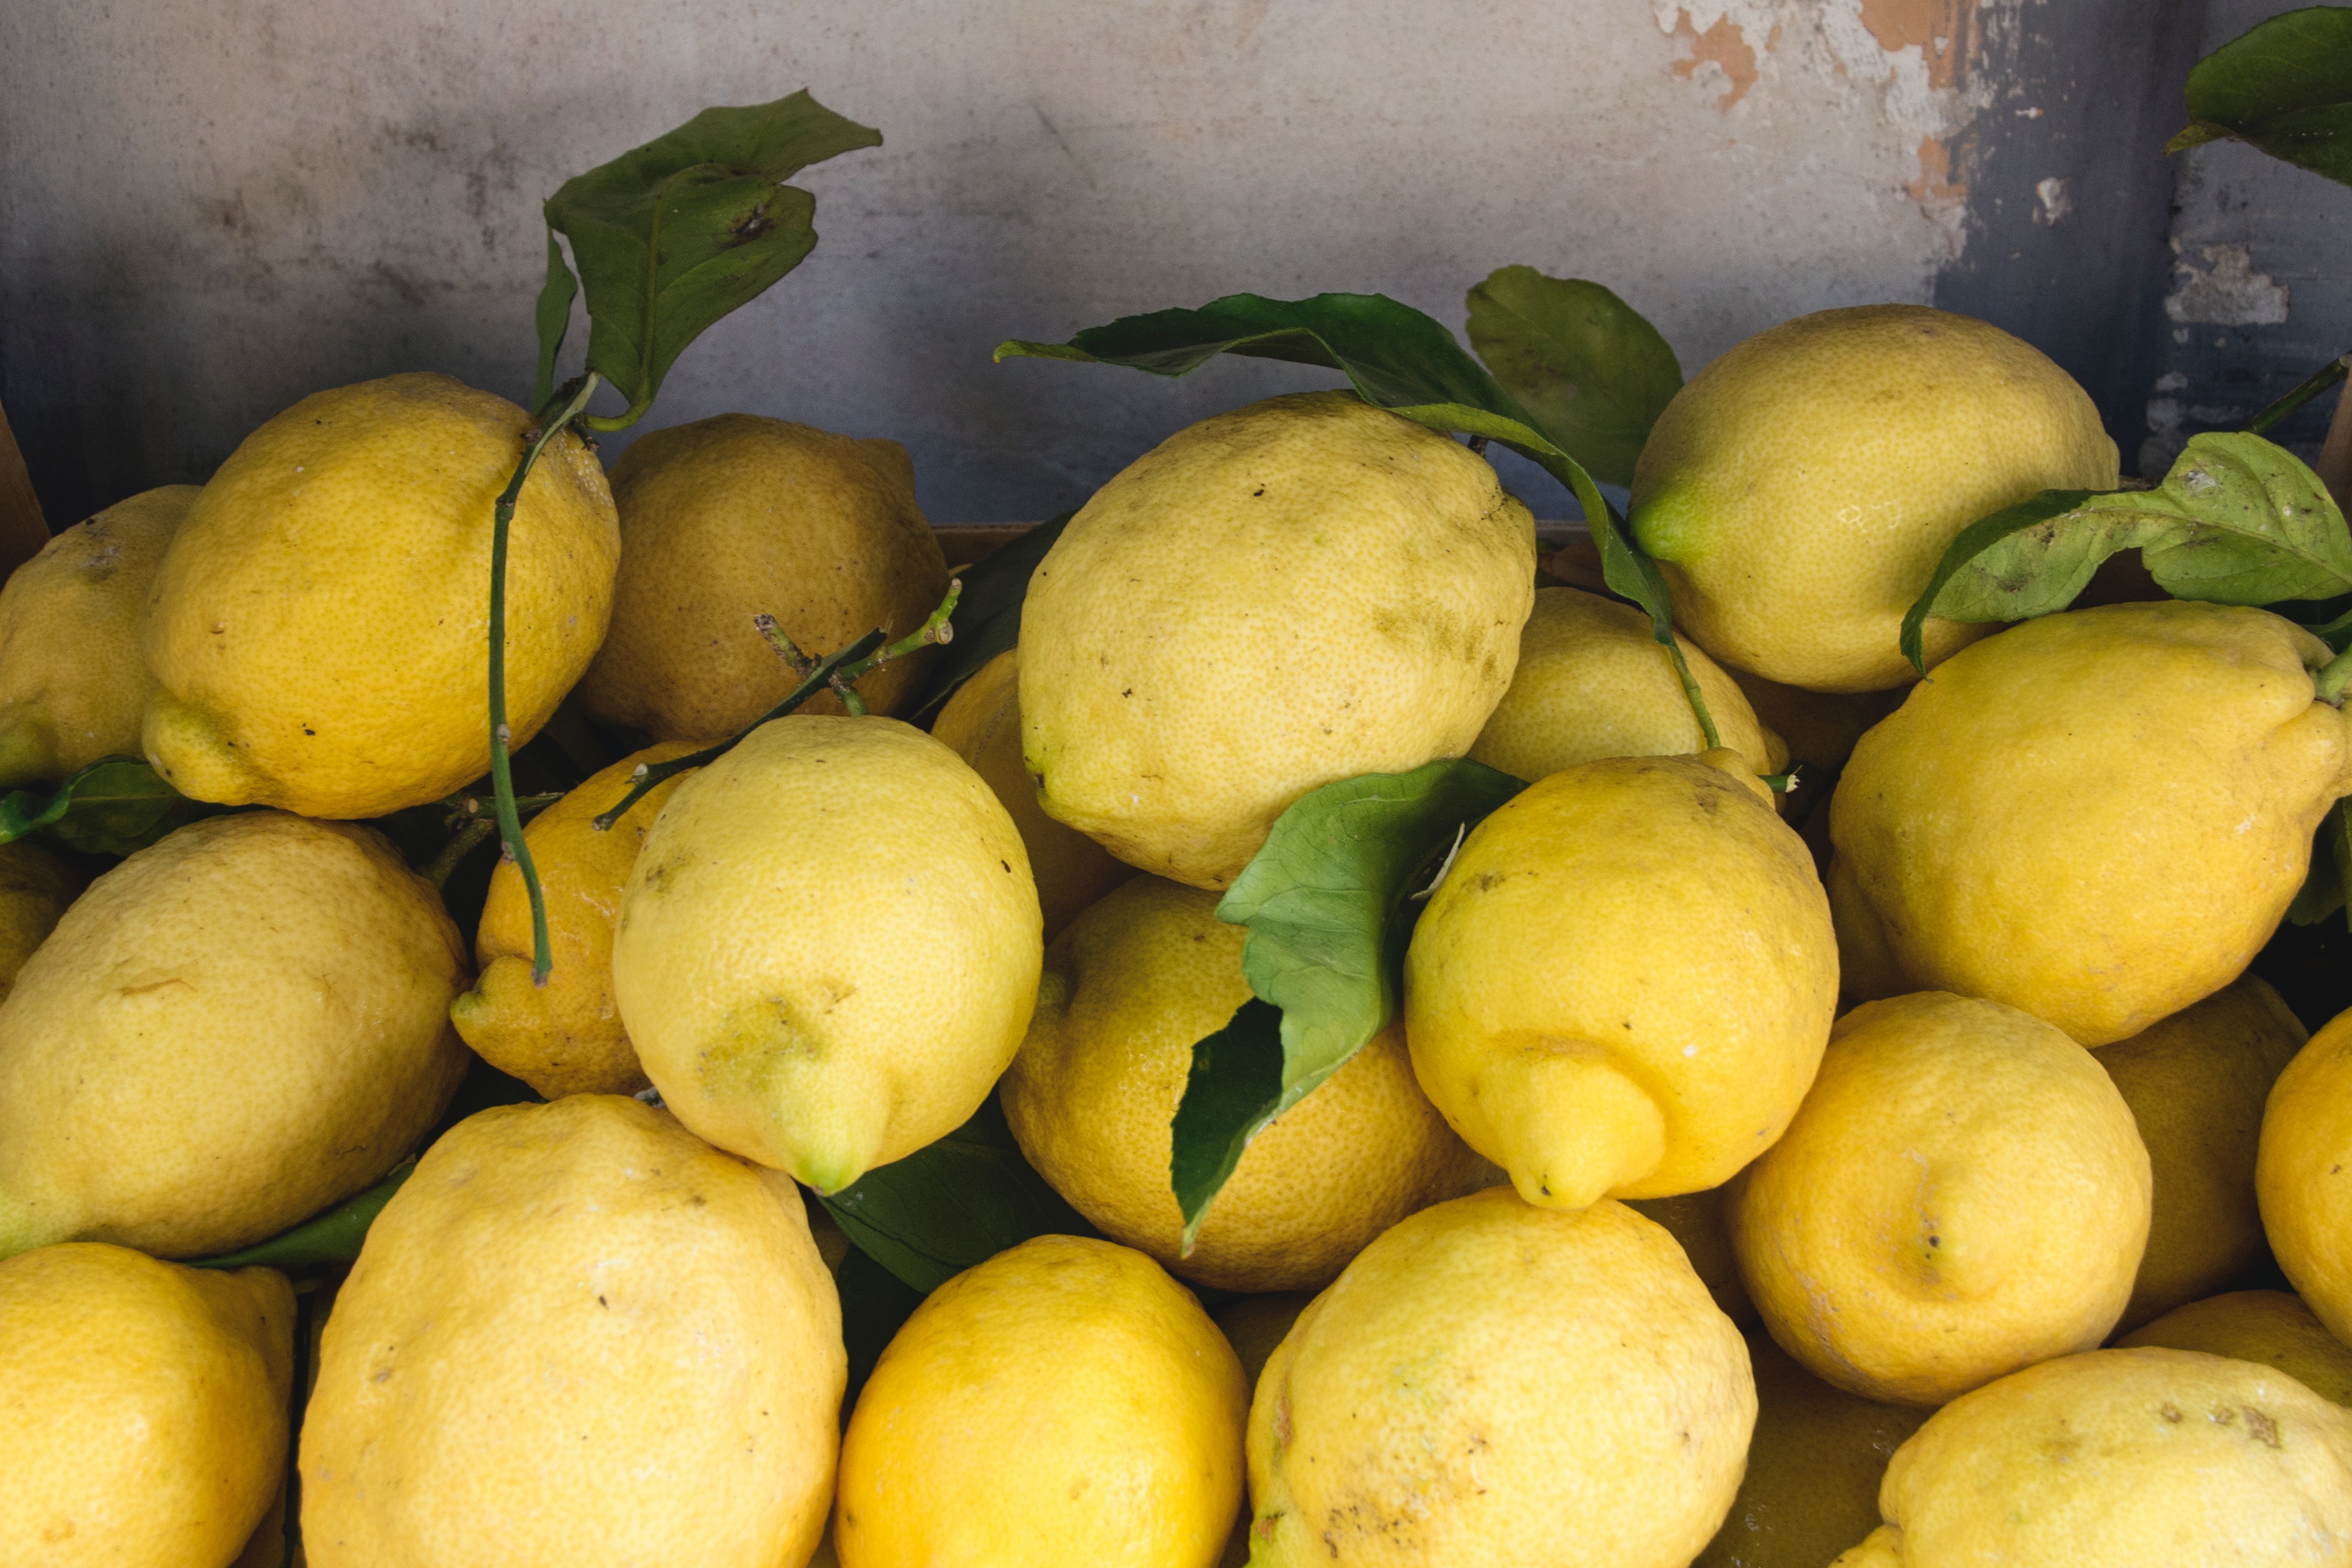 Photo of lemons by Gemma Evans on Unsplash